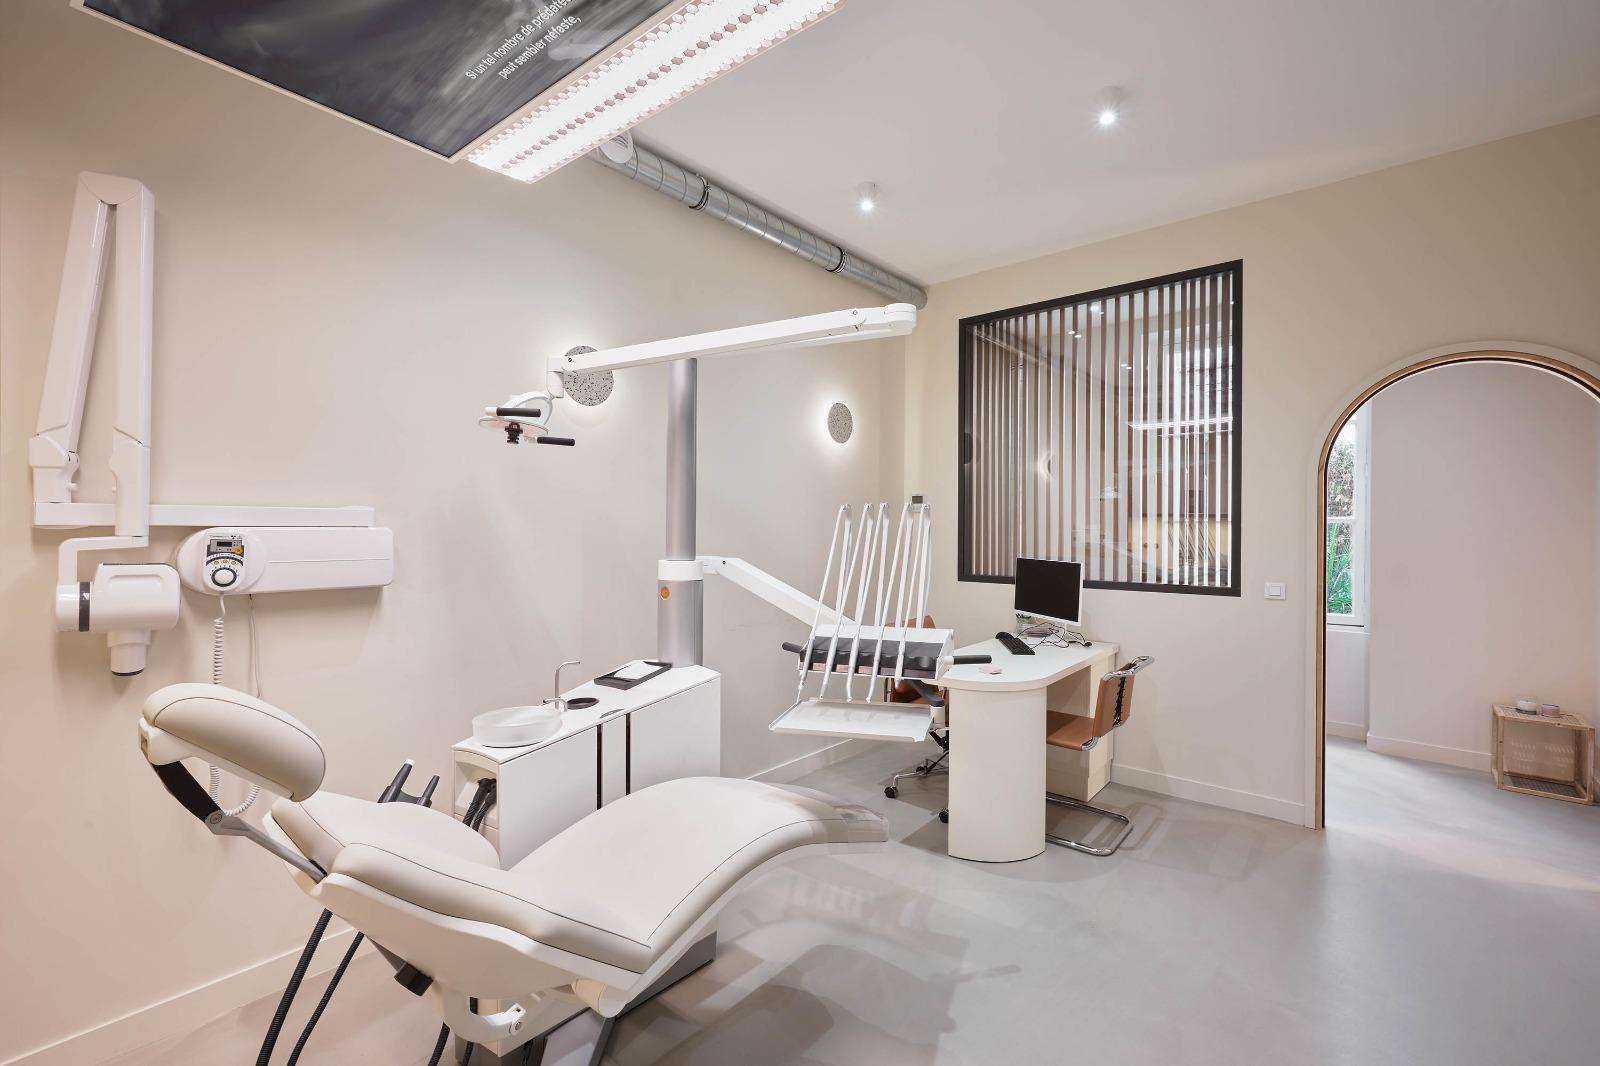 Traitement orthodontique : focus sur les aligneurs Paris Dental Studio